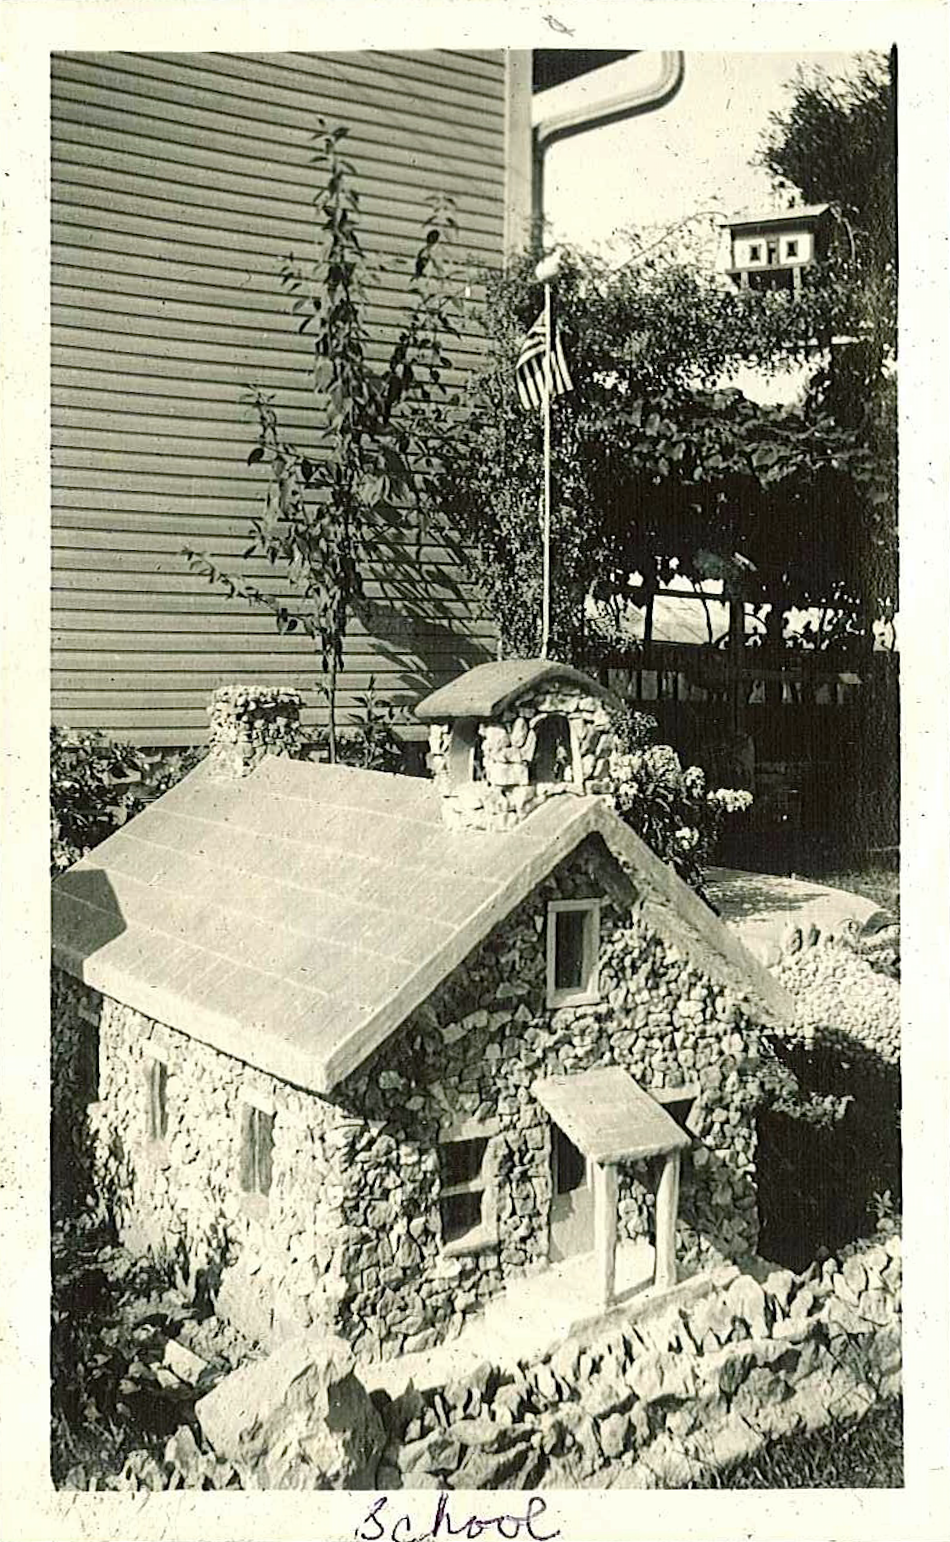 Historic photo of the School House